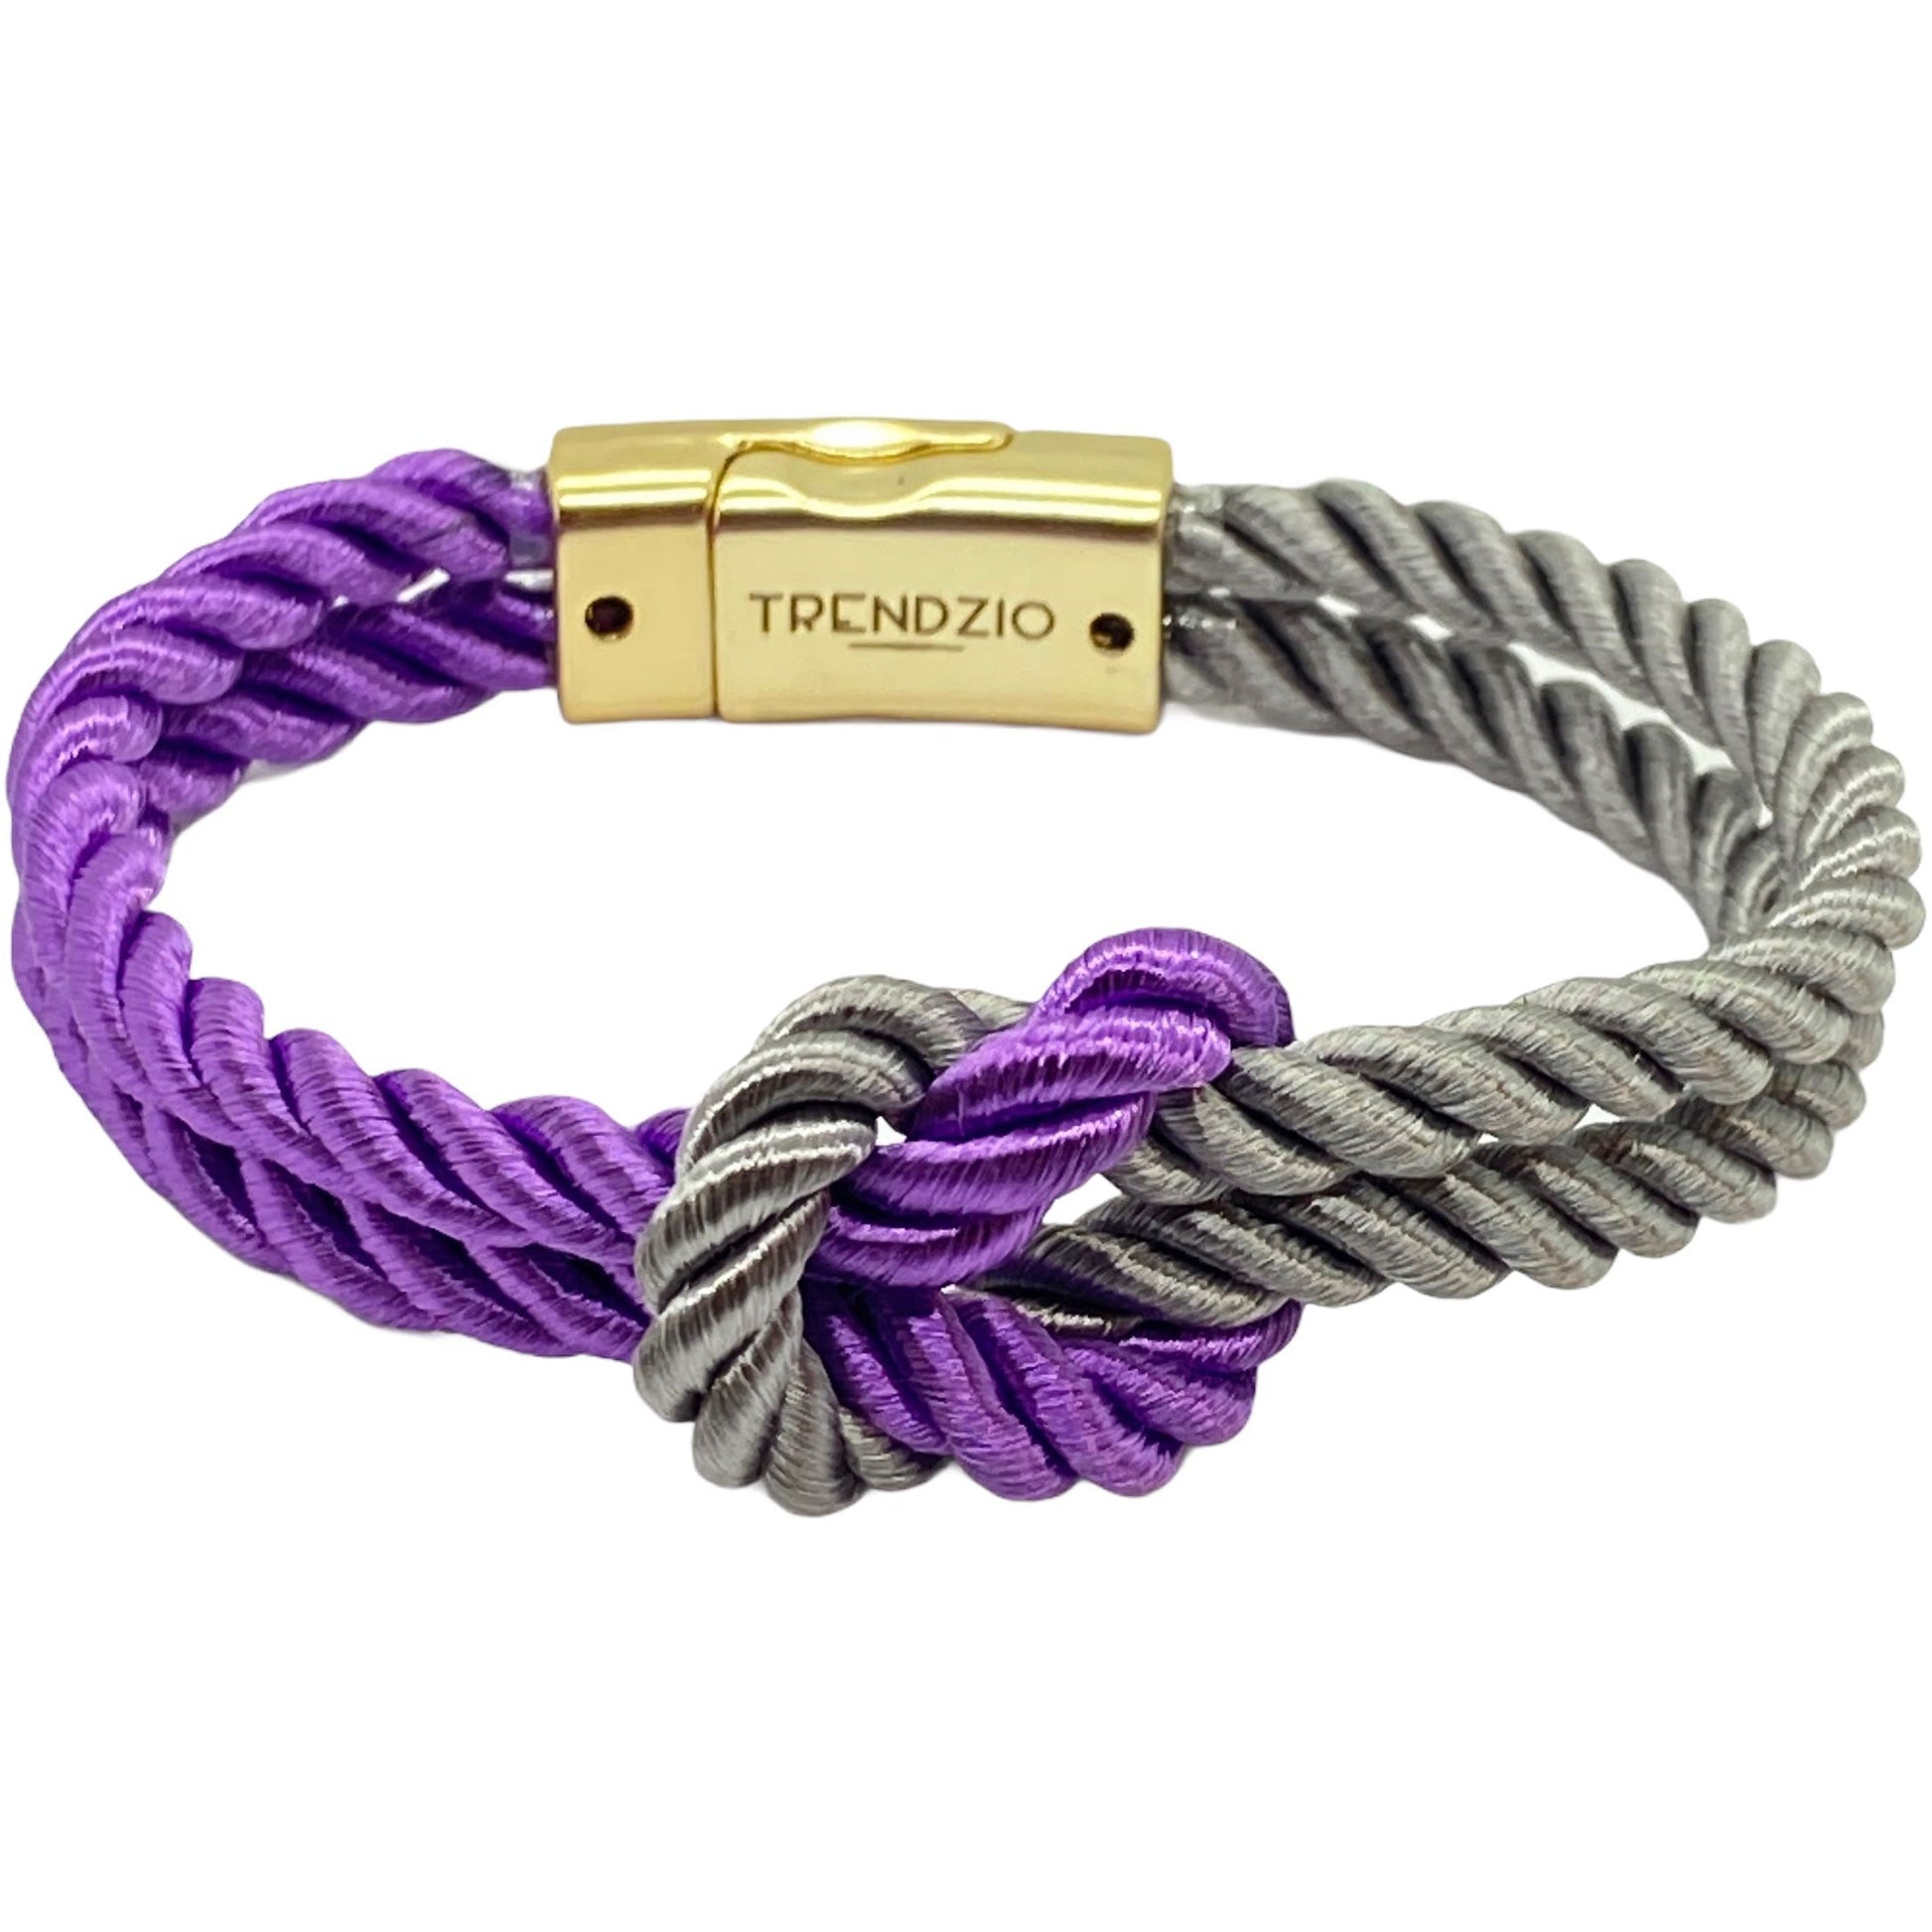 The Original Love Knot Satin Rope Bracelet- Grey and Purple Bracelets Trendzio Grey and Purple 